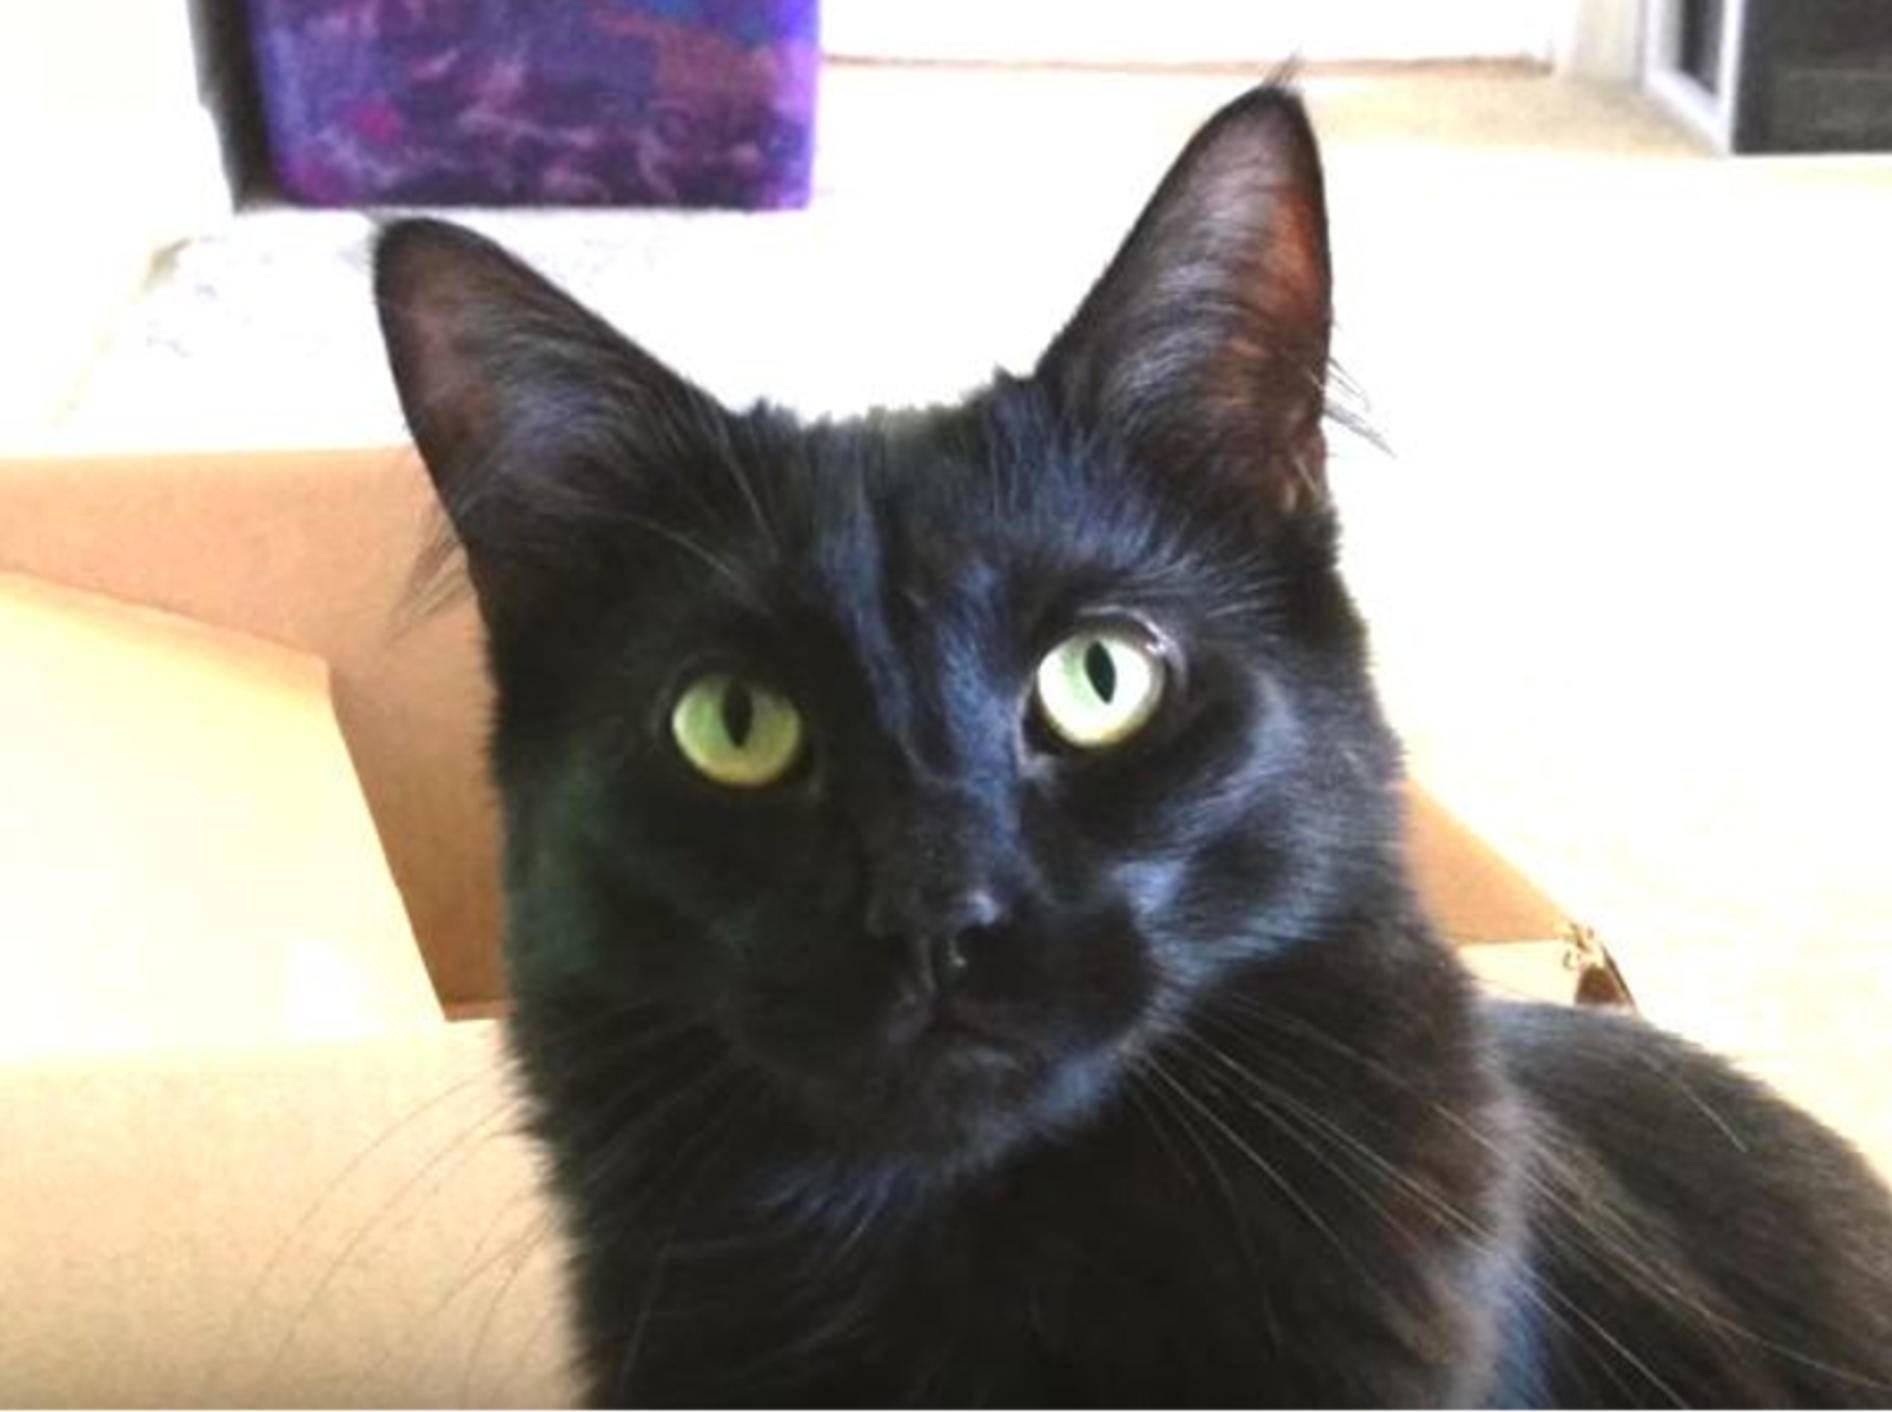 Schwarze Katzen bringen Unglück? Von wegen! – YouTube / Cole and Marmalade